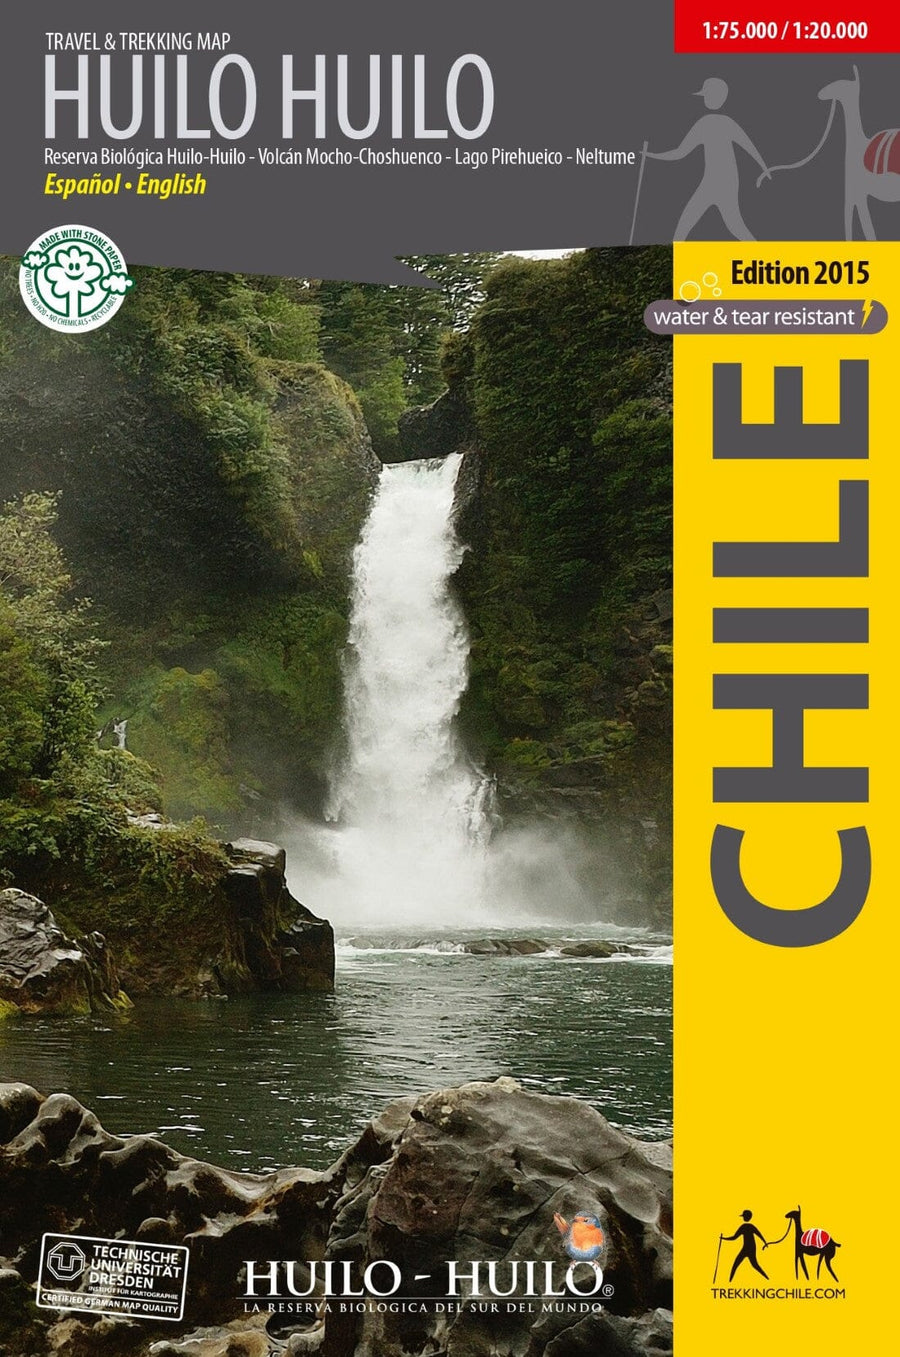 Huilo Huilo Travel and Trekking Map | Trekking Chile carte pliée 